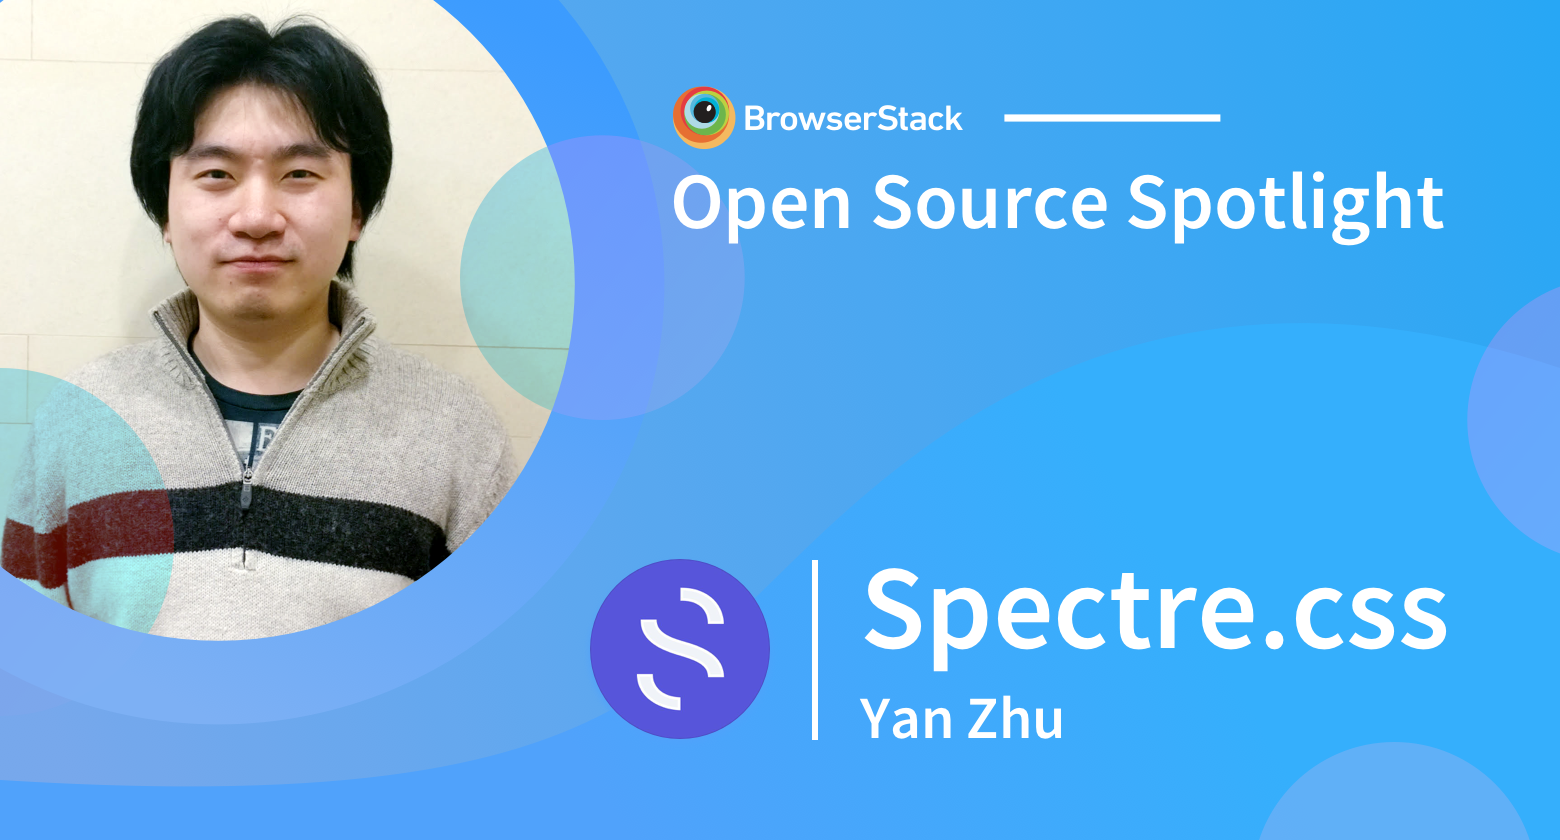 Yan Zhu, the creator of Spectre.css